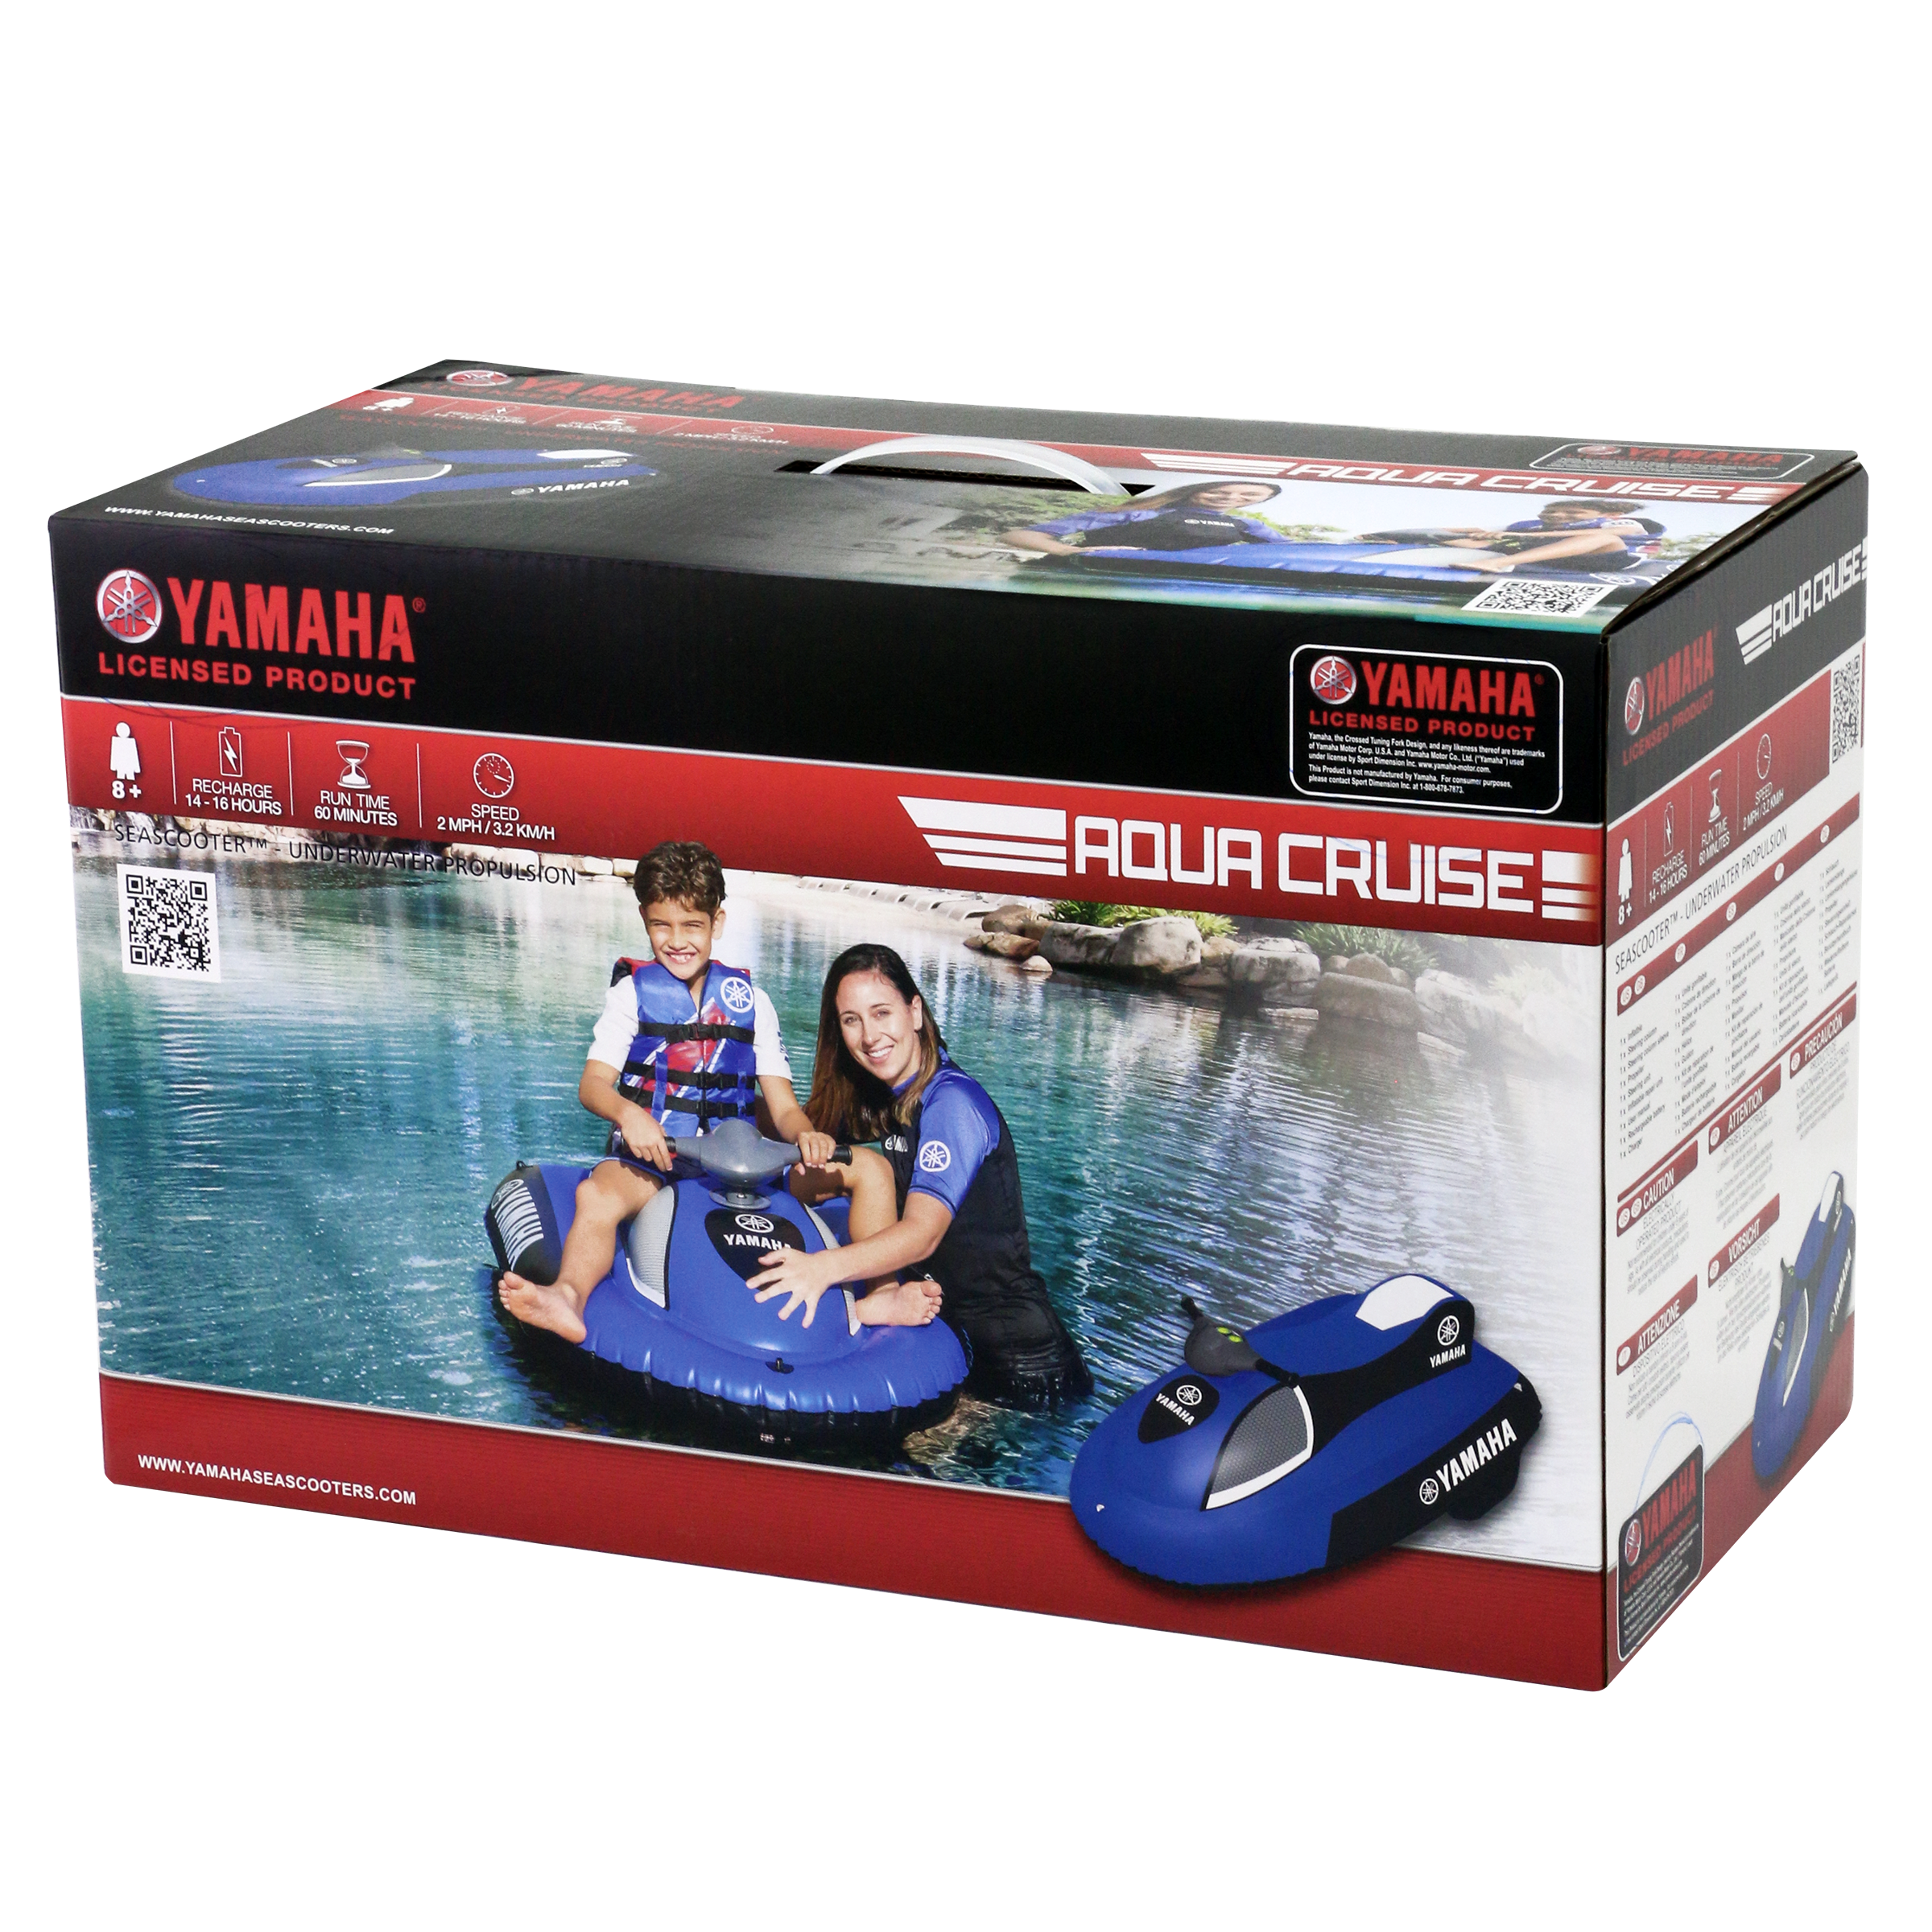 Packaging Yamaha Aqua Cruise